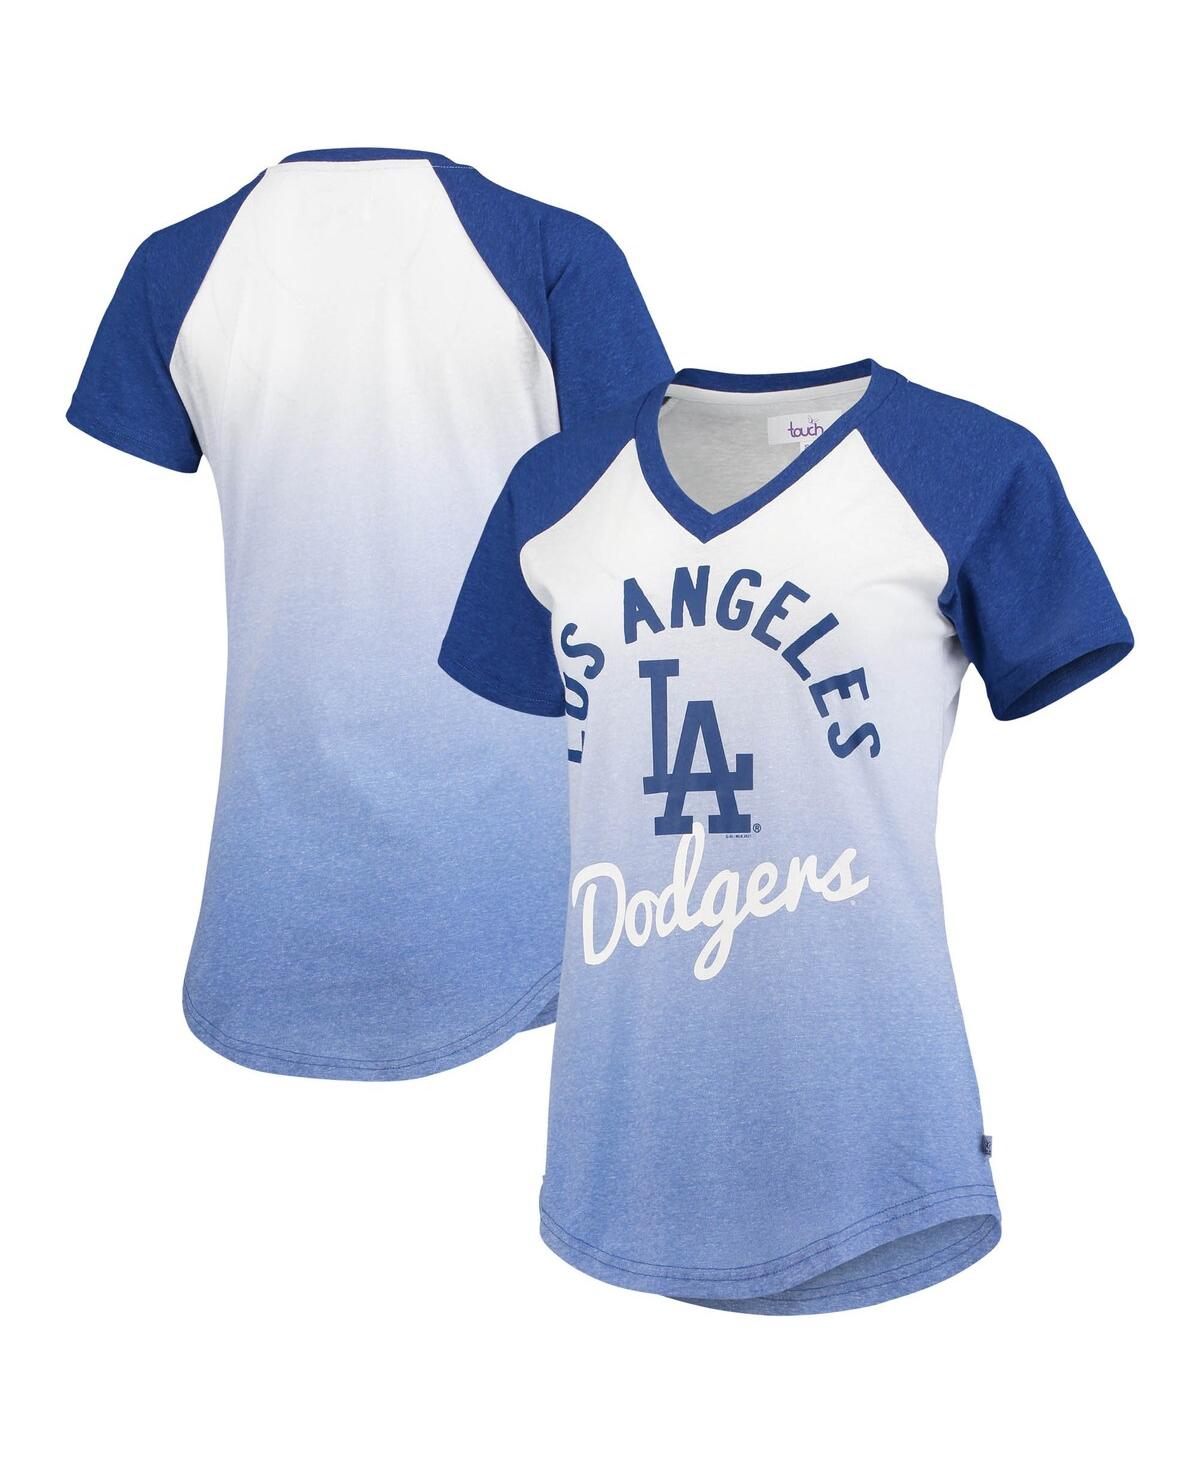 Women's Royal and White Los Angeles Dodgers Shortstop Ombre Raglan V-Neck T-Shirt - Royal, White